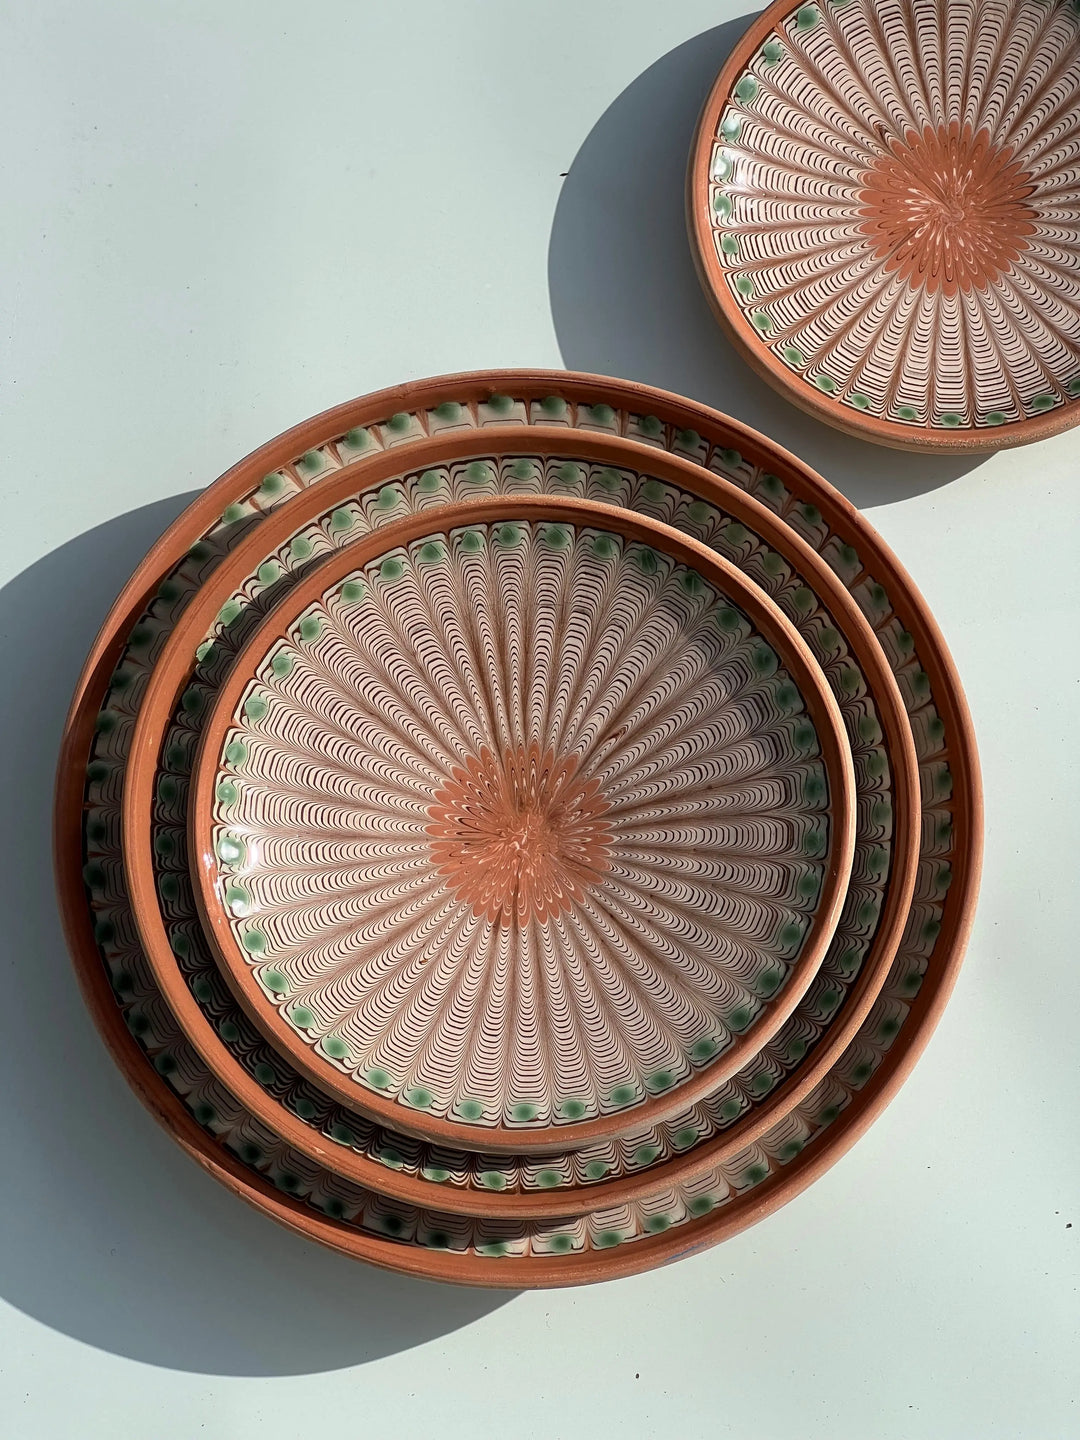 Horezu keramik tallerken | No. 06 | 4 forskellige størrelser Studio Hafnia